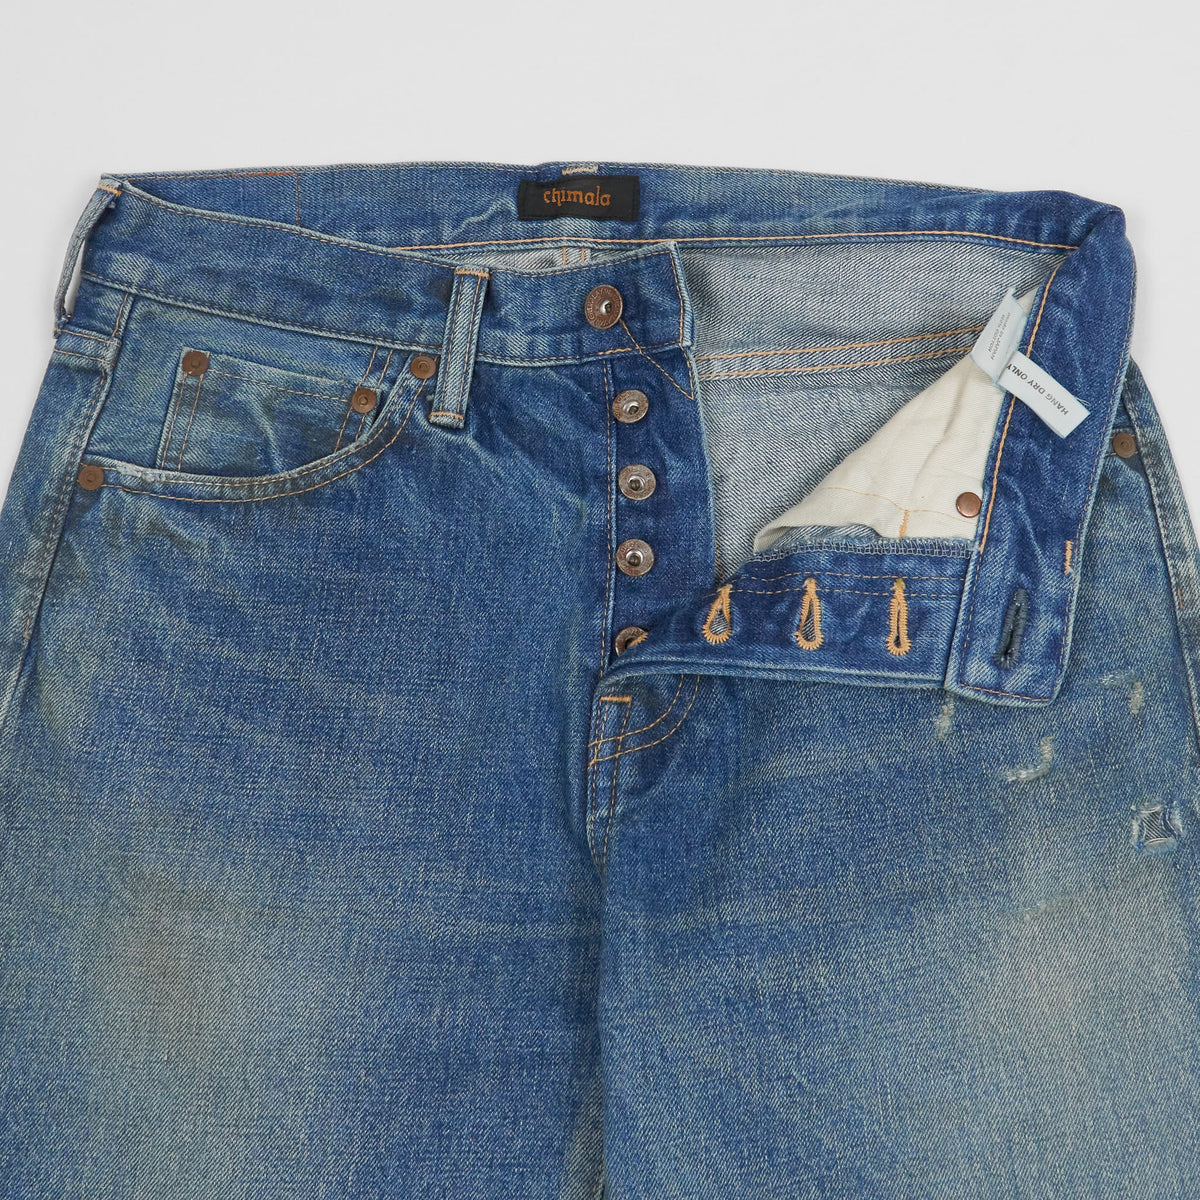 Chimala Heavy Washed Unisex Selvage Denim Jeans